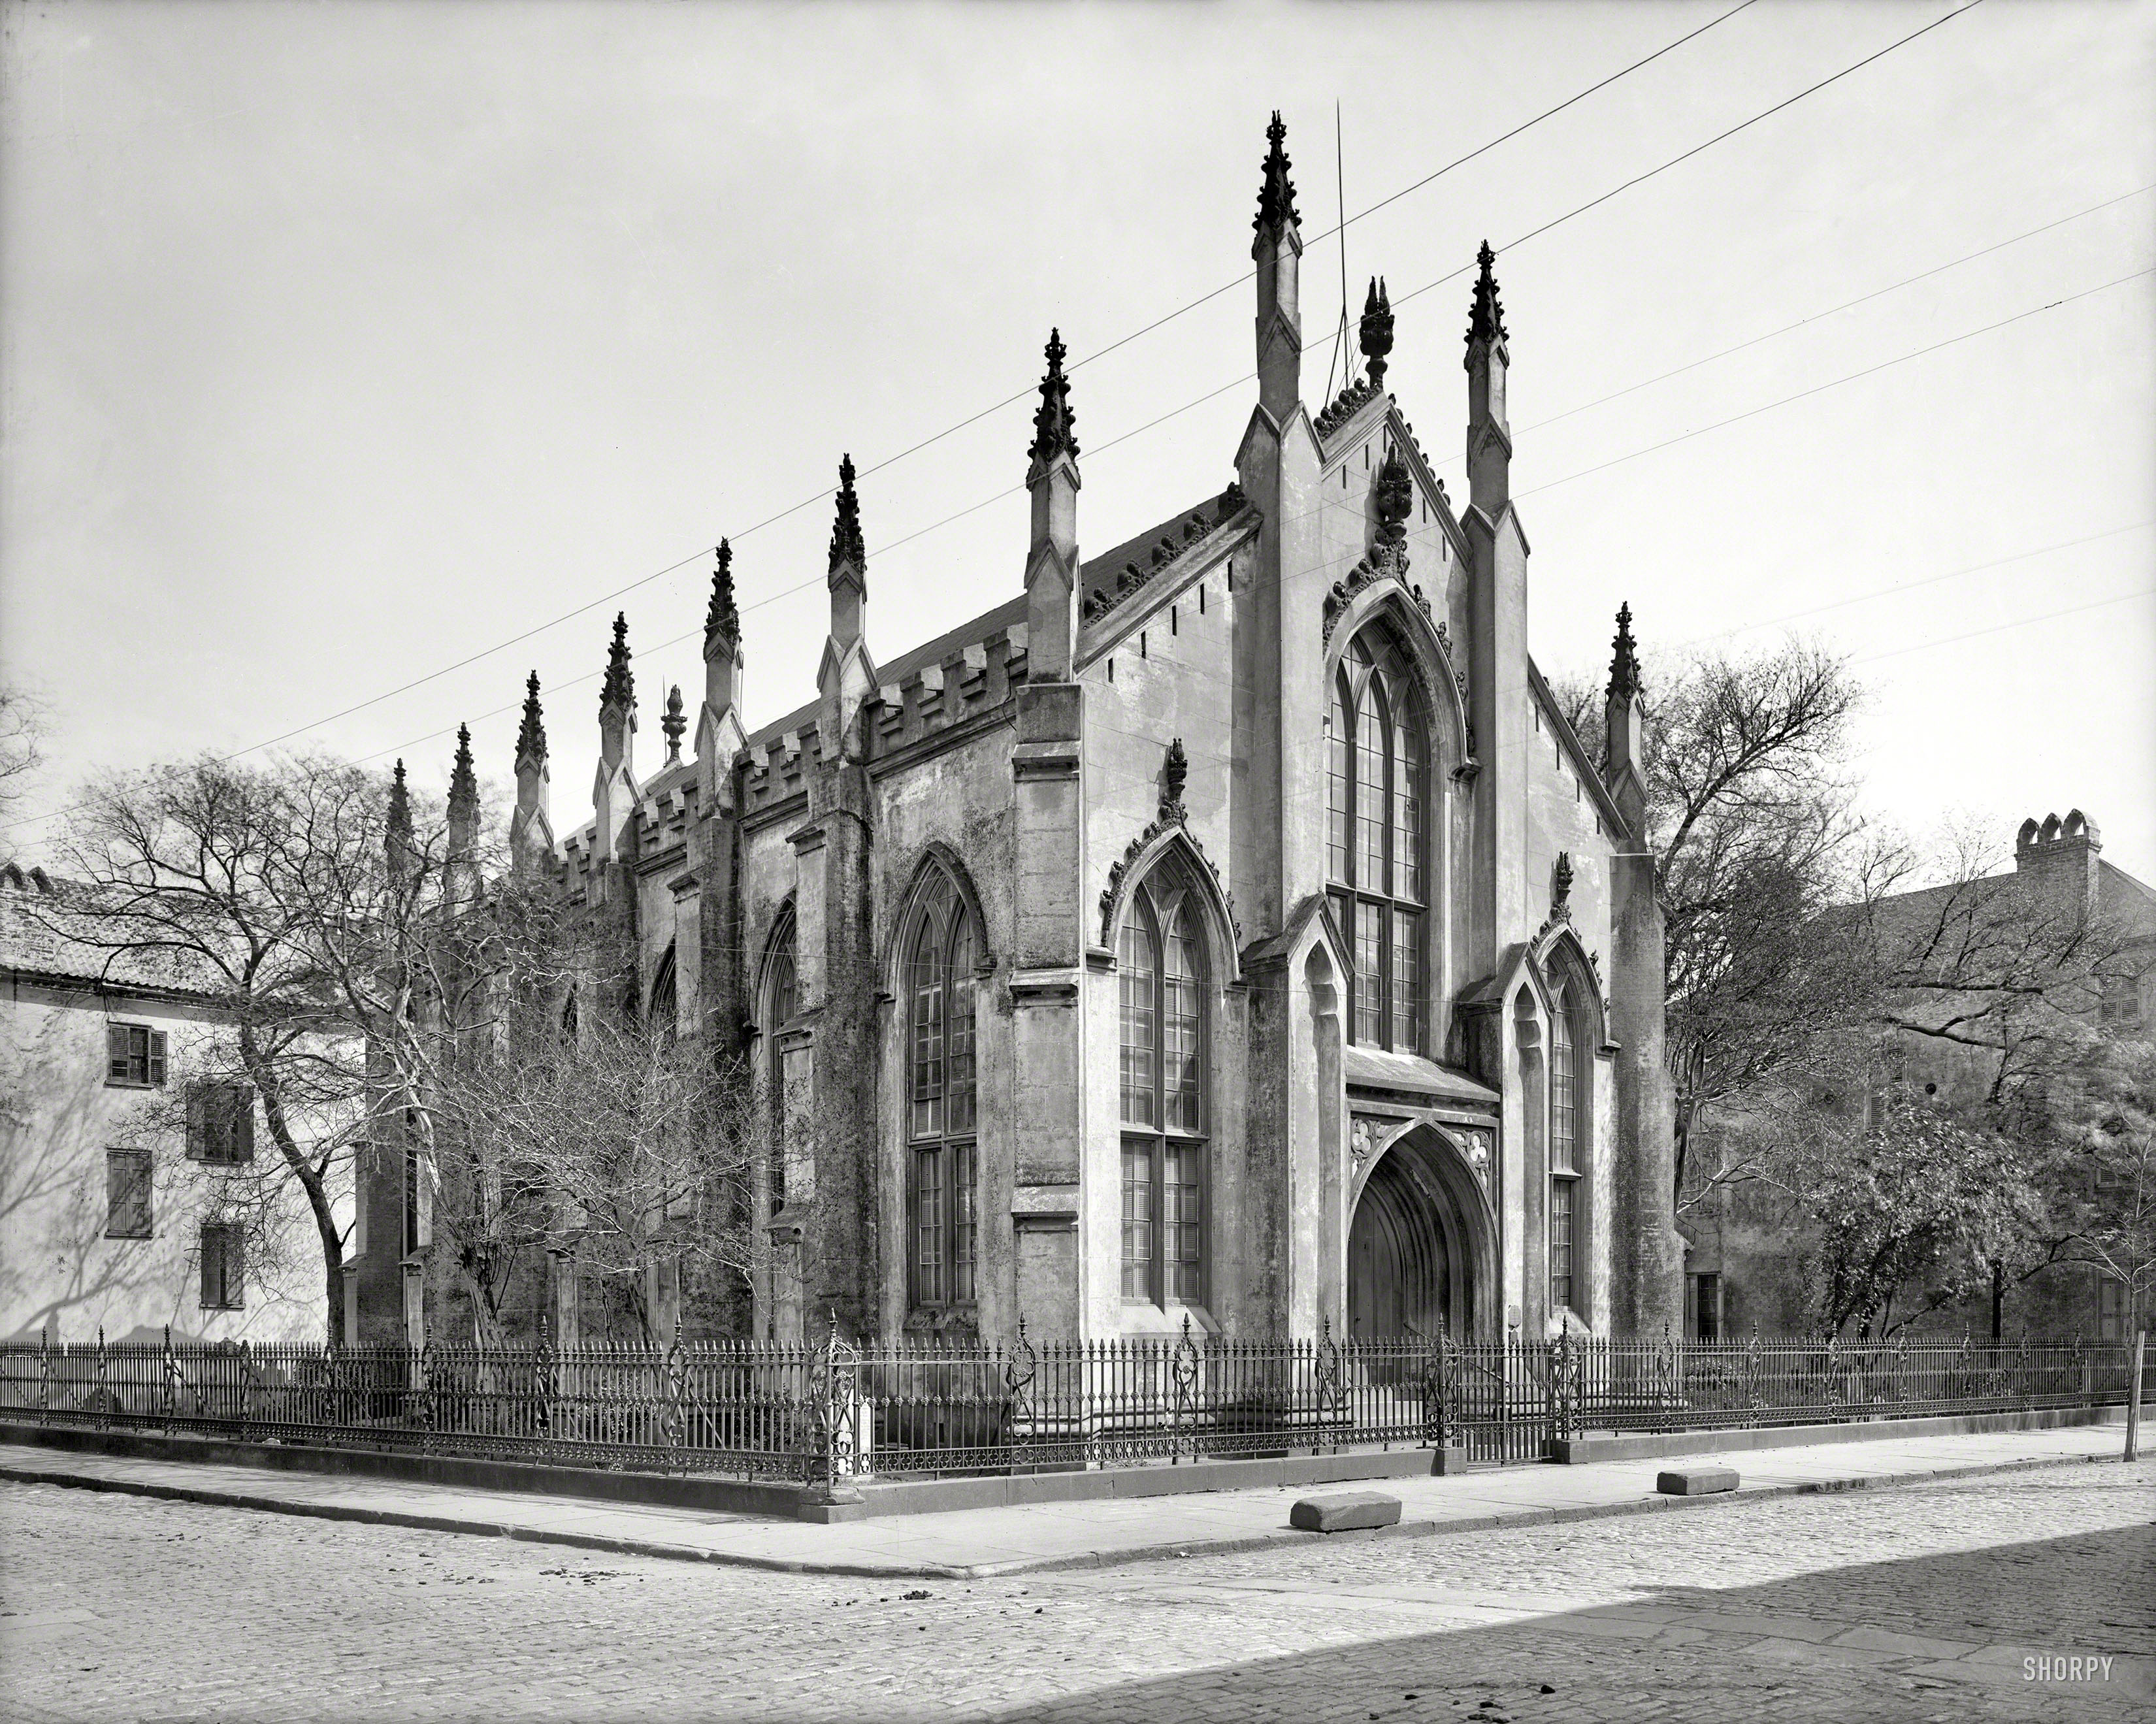 Circa 1904. "Huguenot Church -- Charleston, S.C." When Pointy met Spiky. 8x10 inch glass negative, Detroit Publishing Company. View full size.